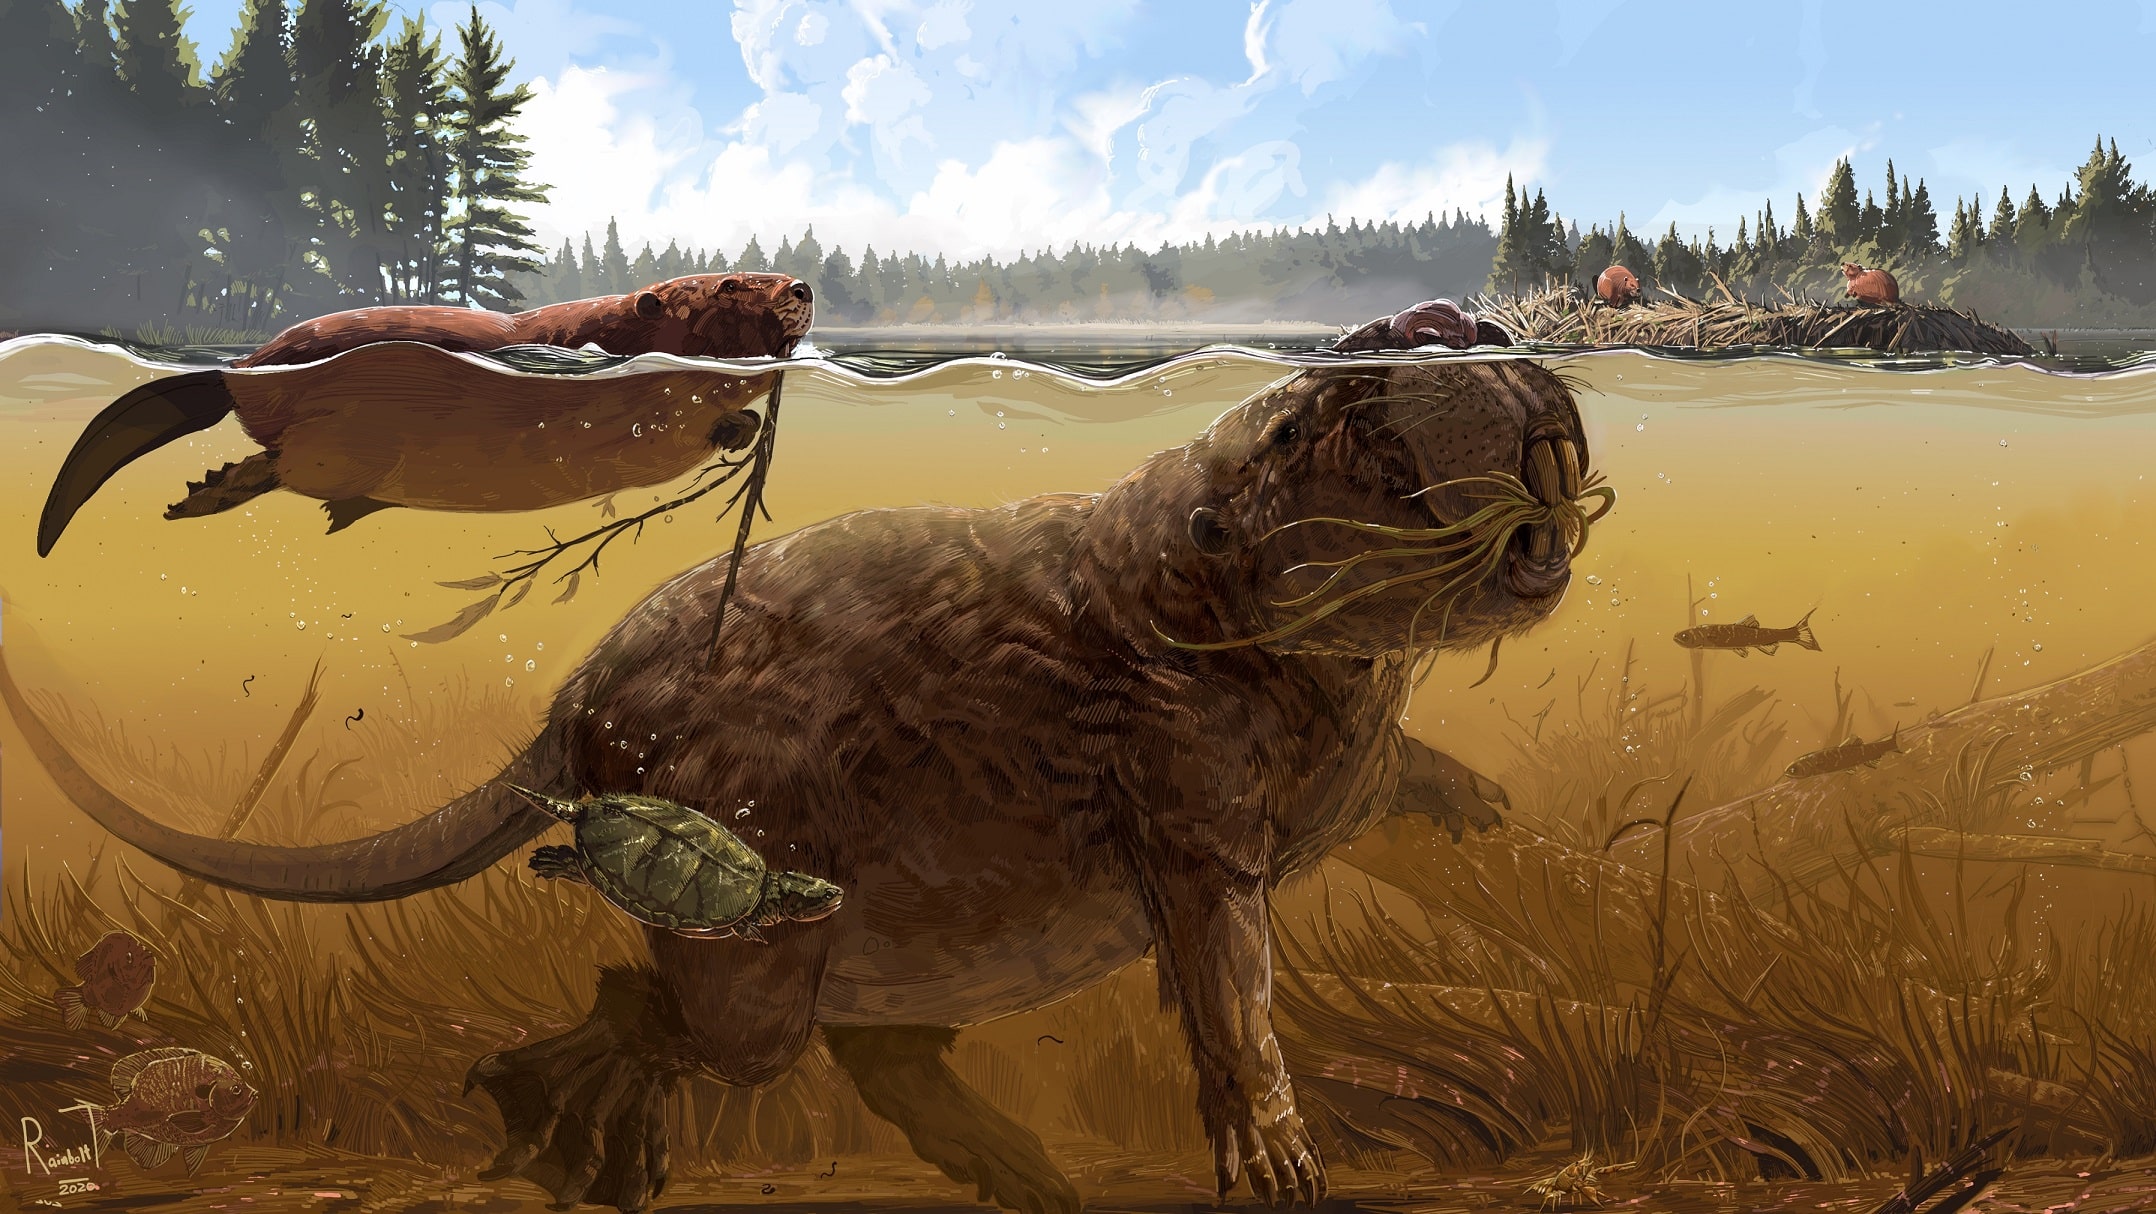 Illustration of a Giant Beaver